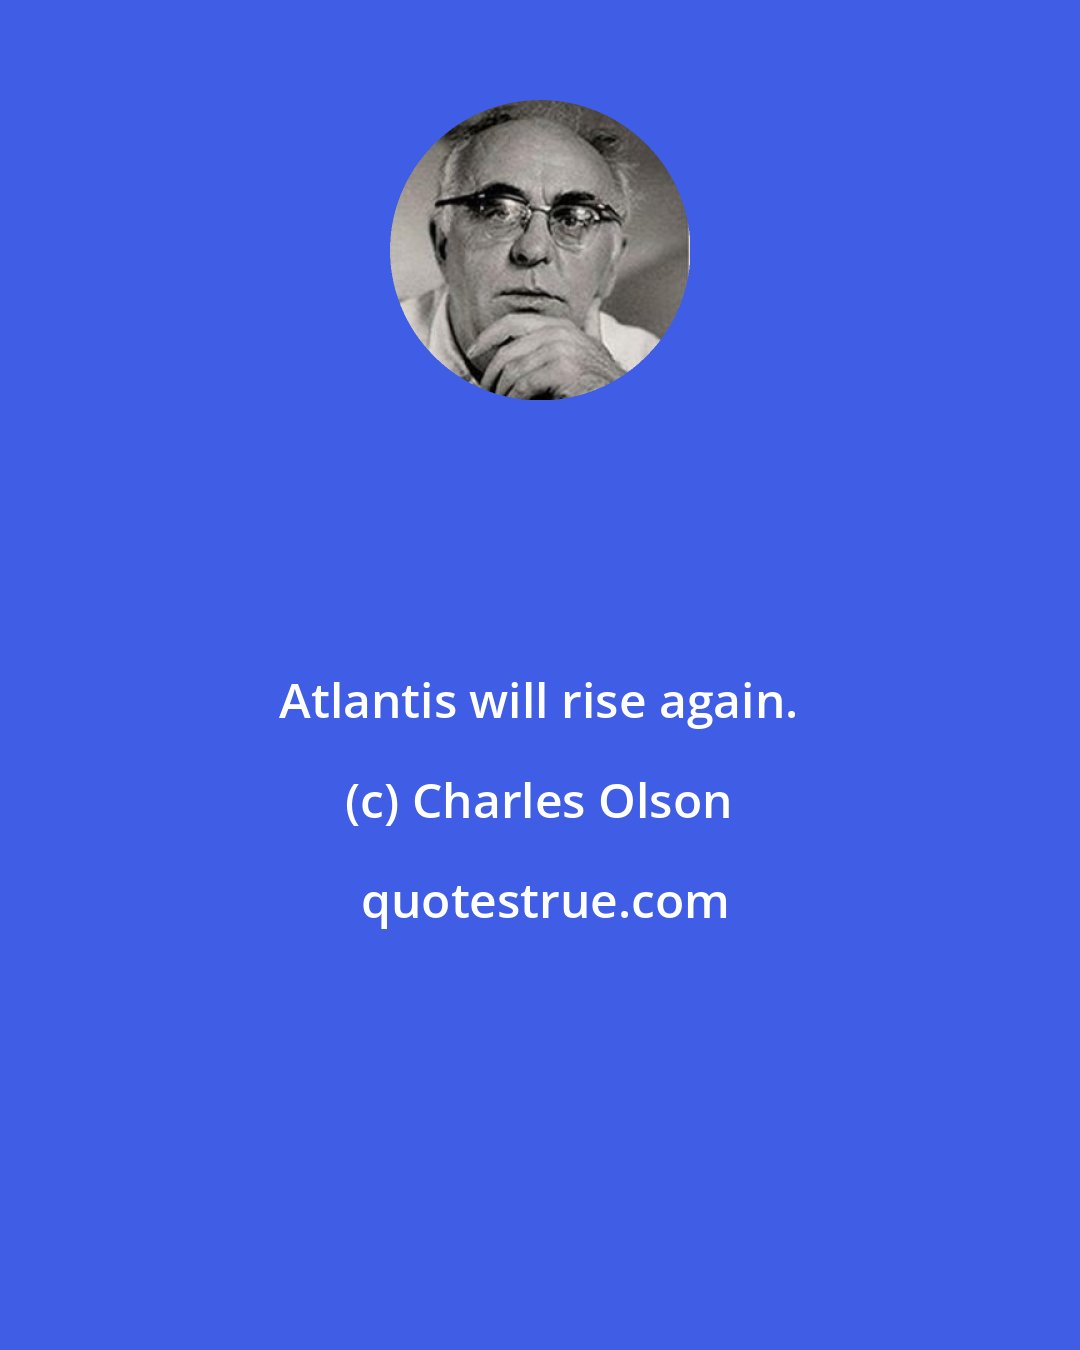 Charles Olson: Atlantis will rise again.